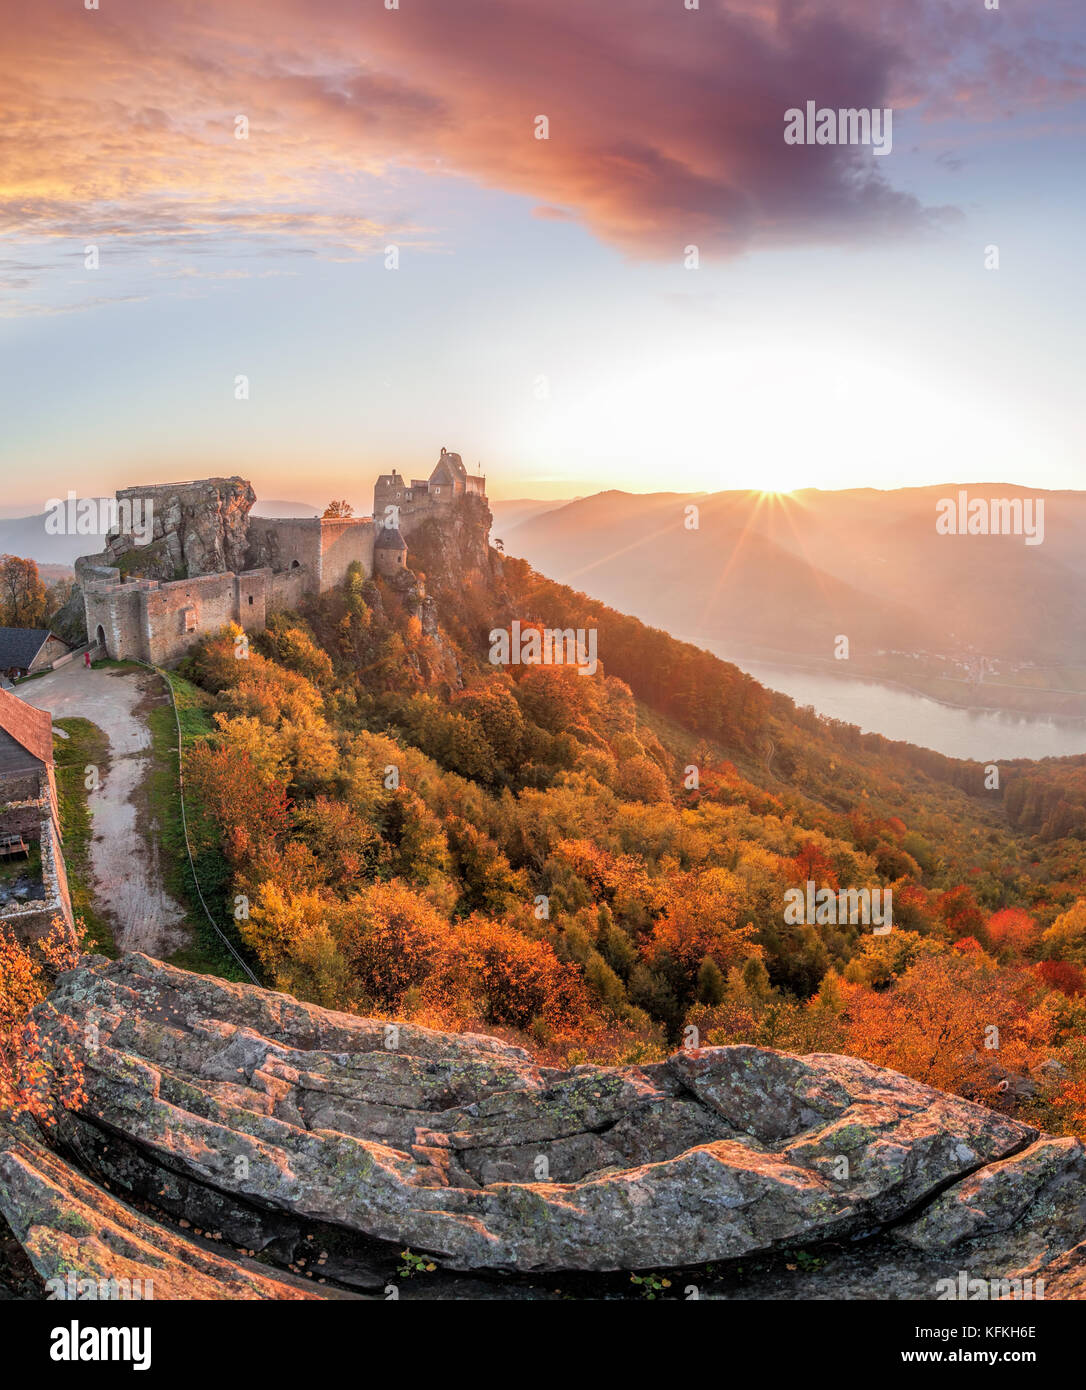 Aggstein castle with autumn forest in Wachau, Austria Stock Photo